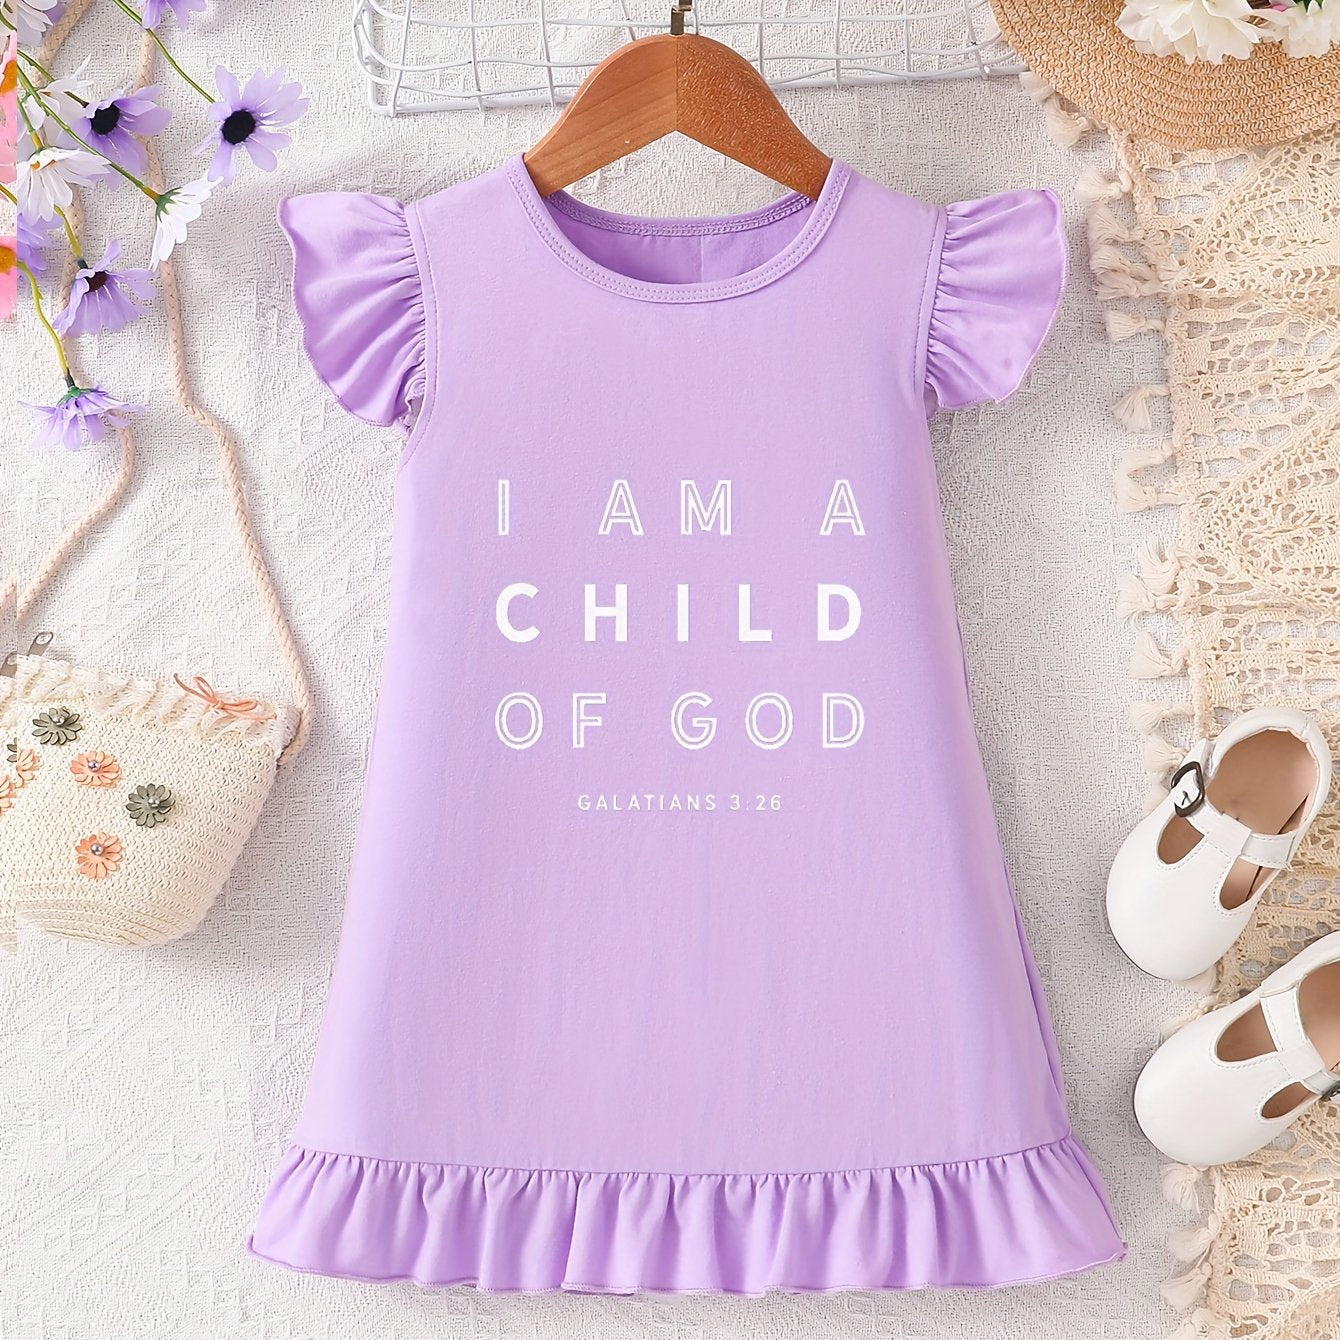 I AM A CHILD OF GOD Christian Toddler Dress claimedbygoddesigns